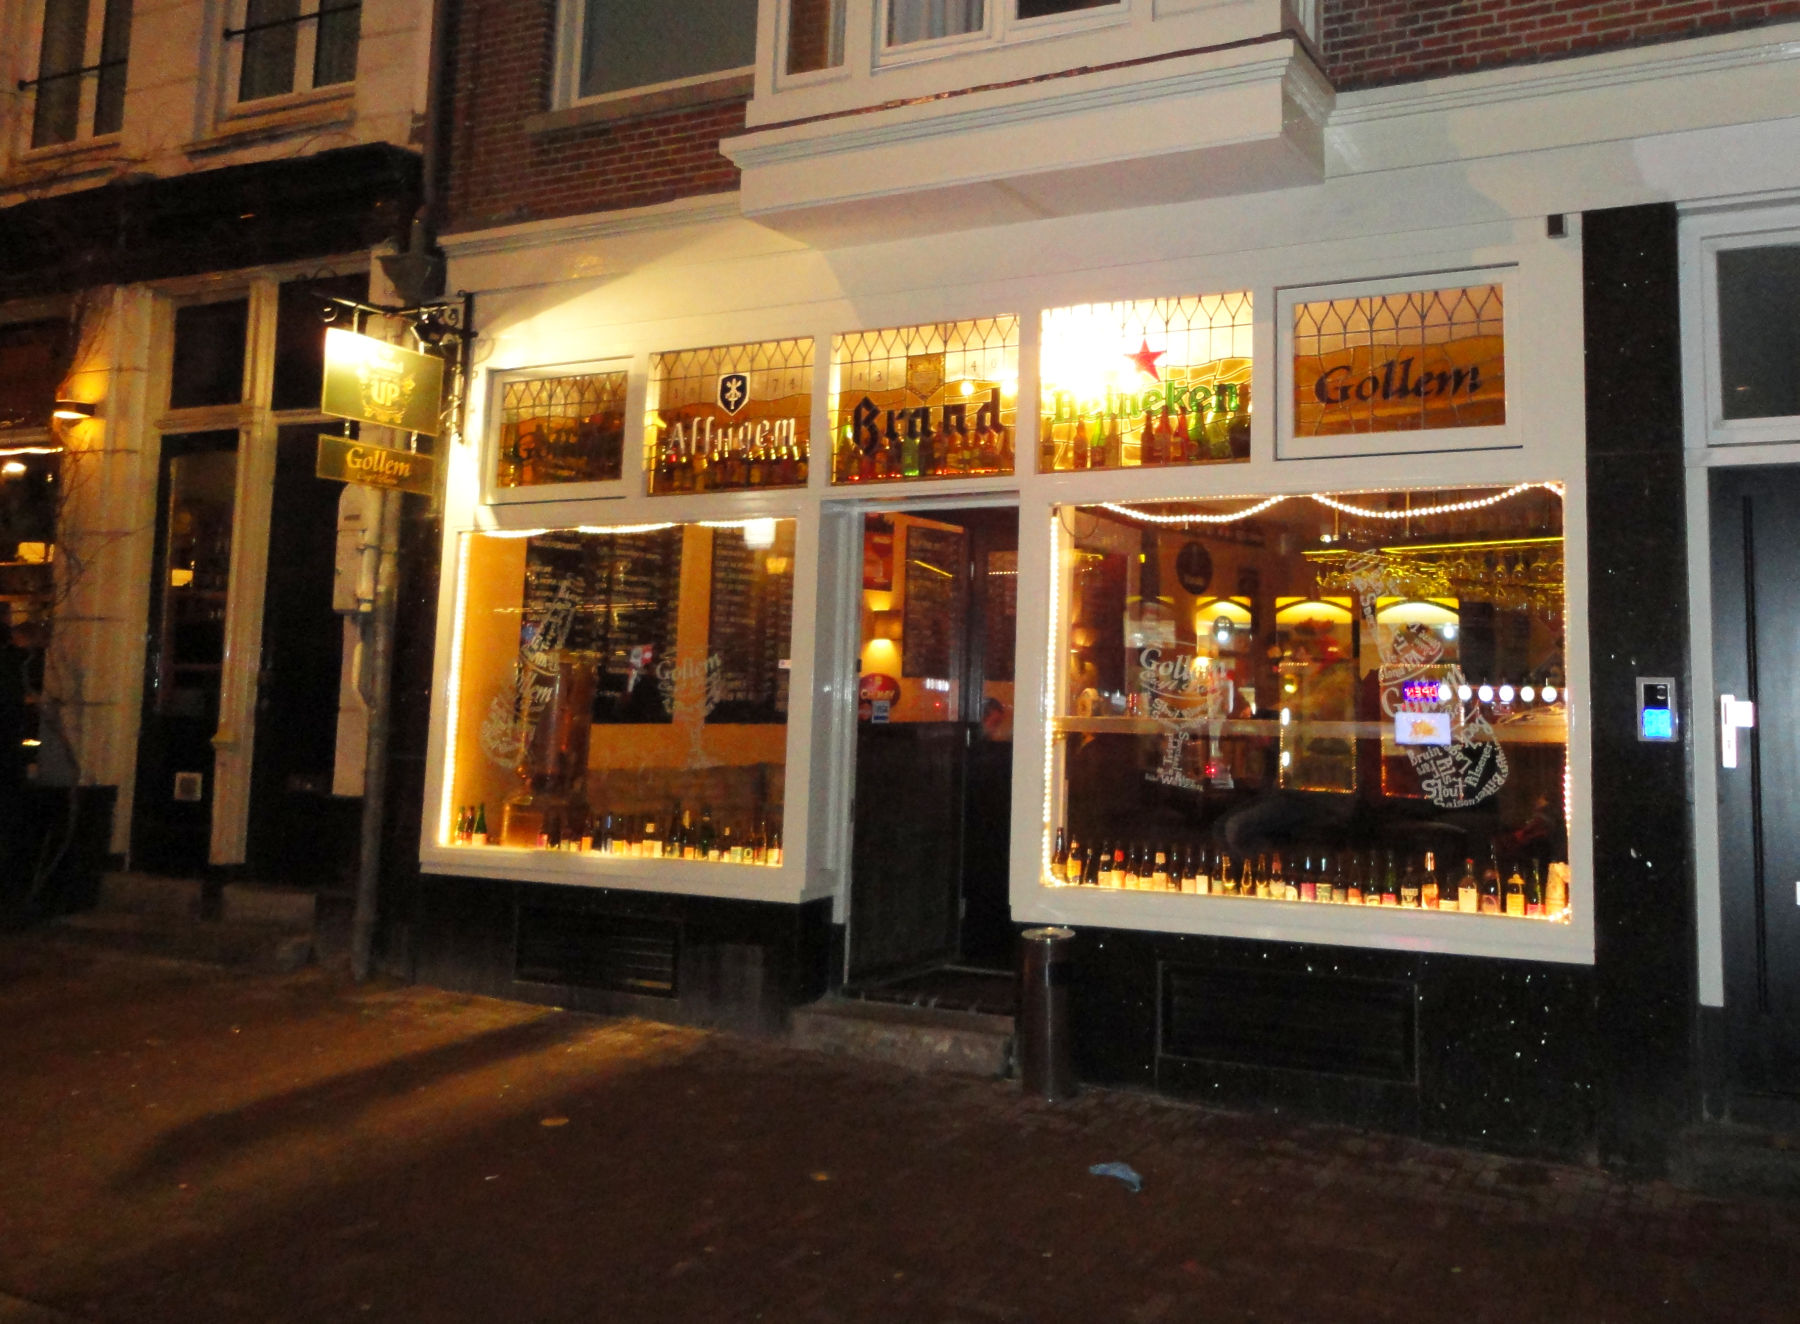 Cafe Gollem, Amsterdam outside